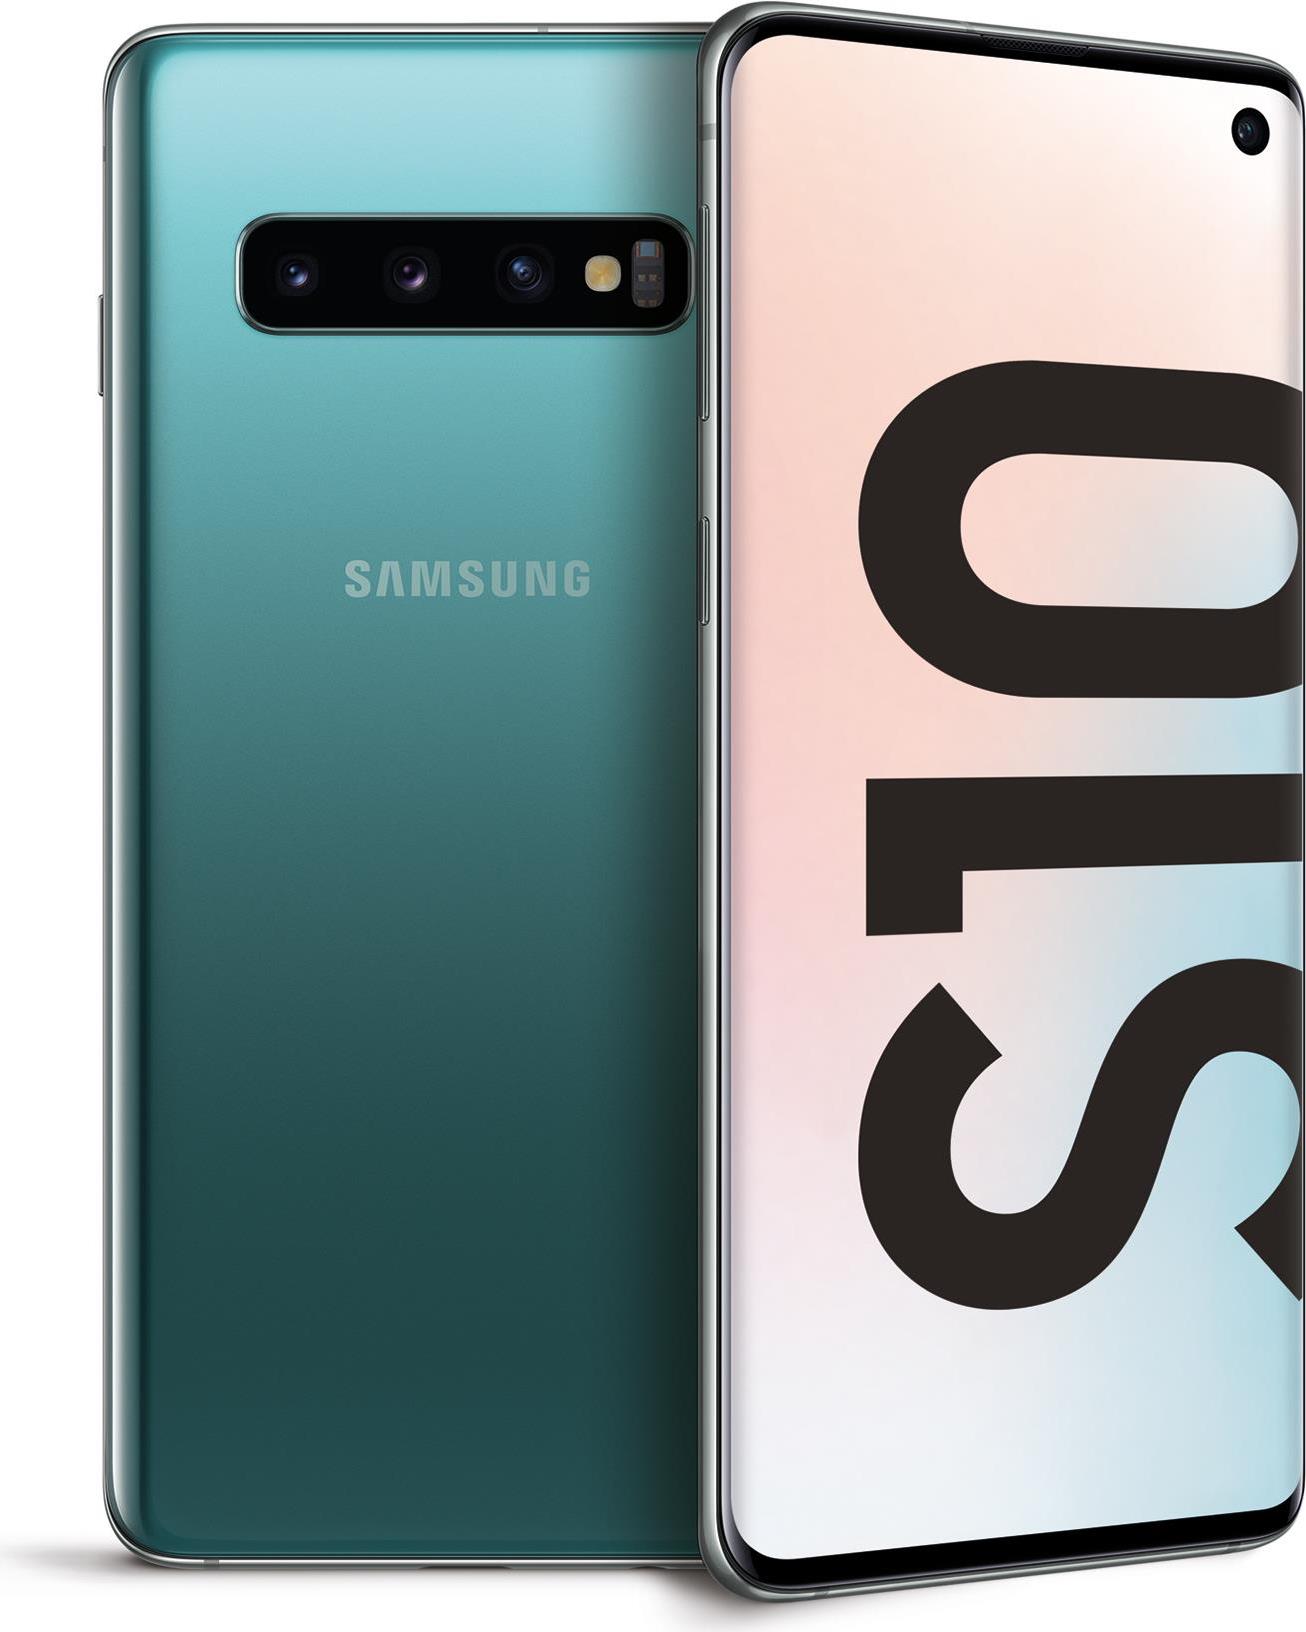 Samsung Galaxy S10 Smartphone (SM-G973FZGDITV)